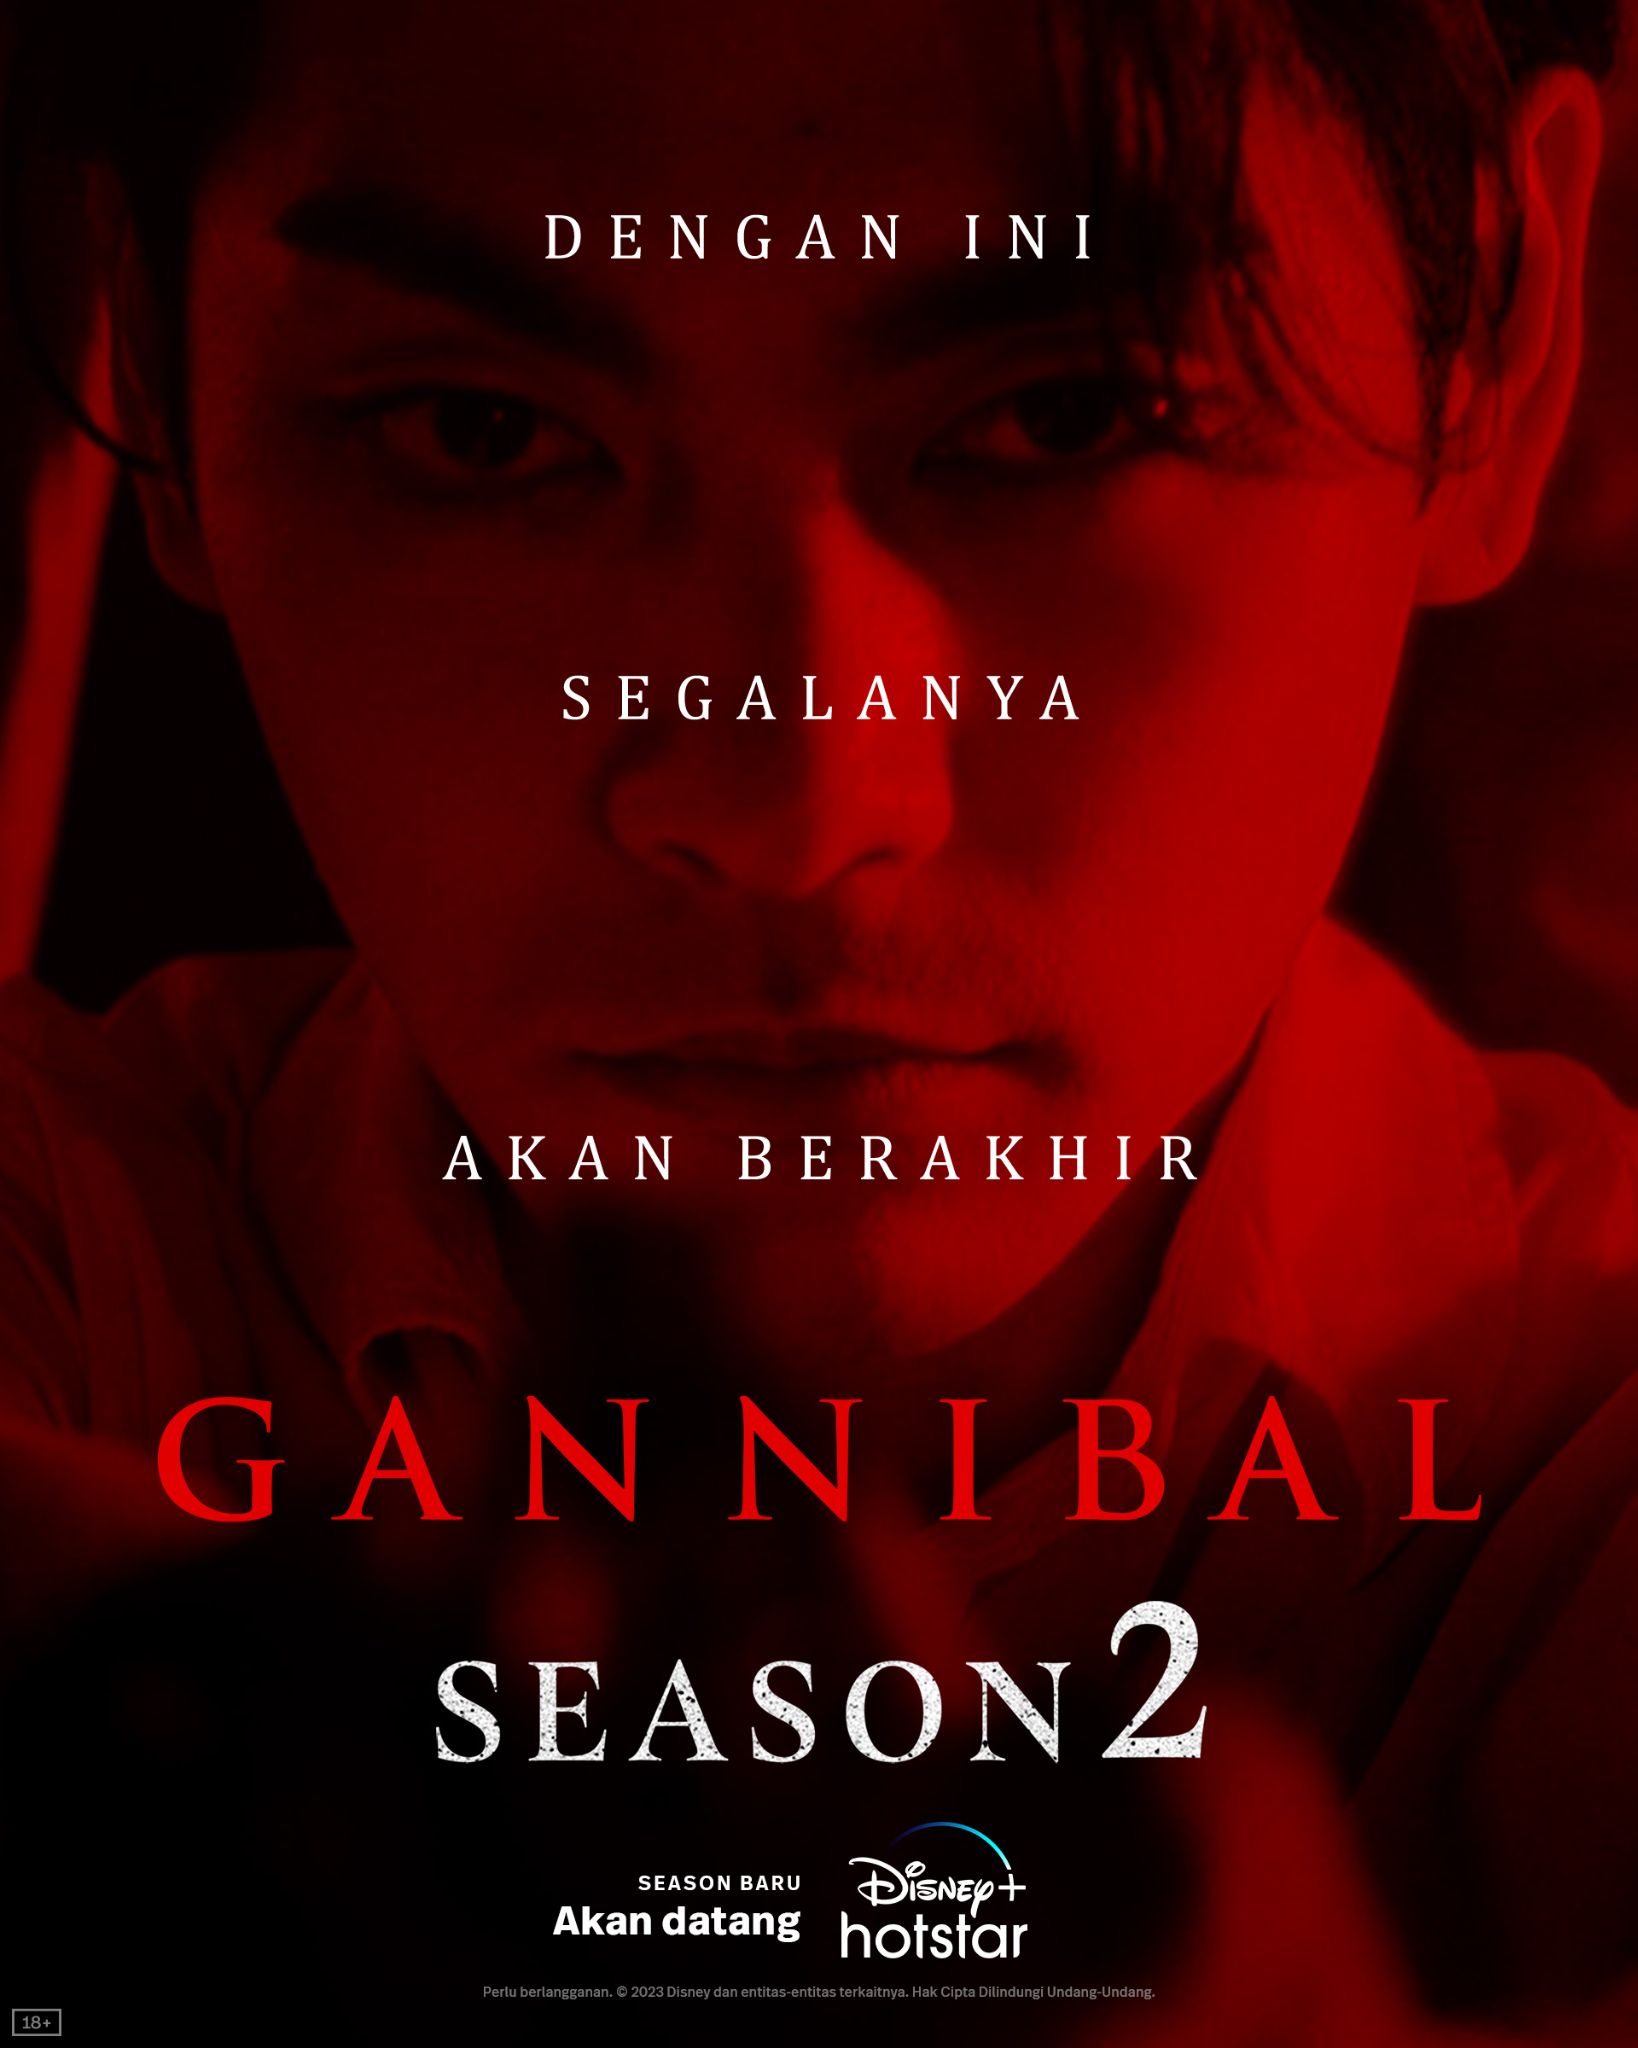 Nantikan Season Kedua dan Terakhir dari Serial ‘Gannibal’ yang Akan Segera Tayang